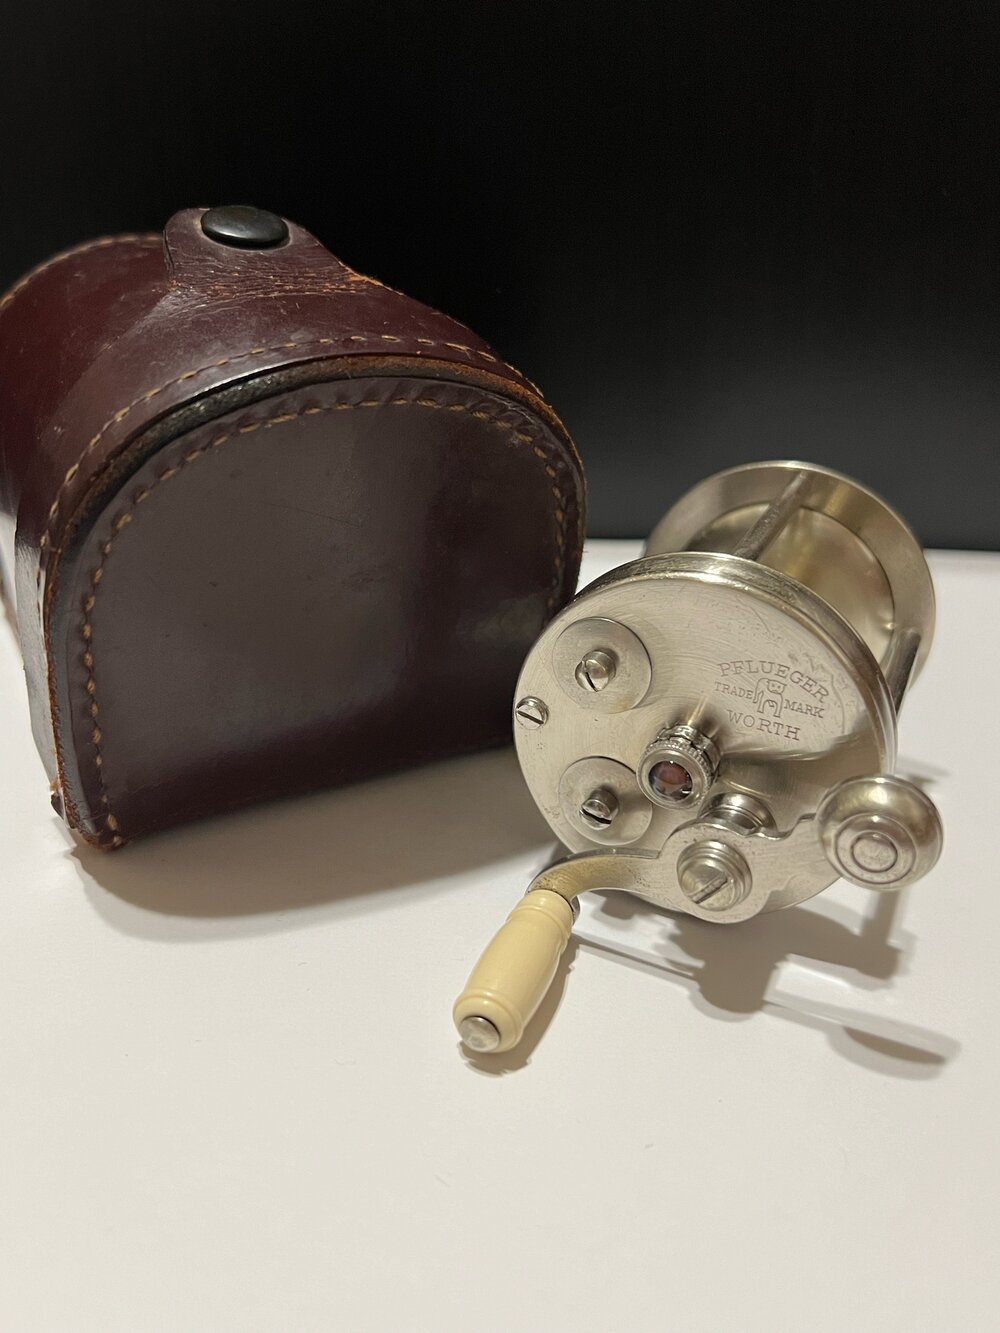 Pflueger WORTH Jeweled with Leather Case Circa - 1915 — VINTAGE